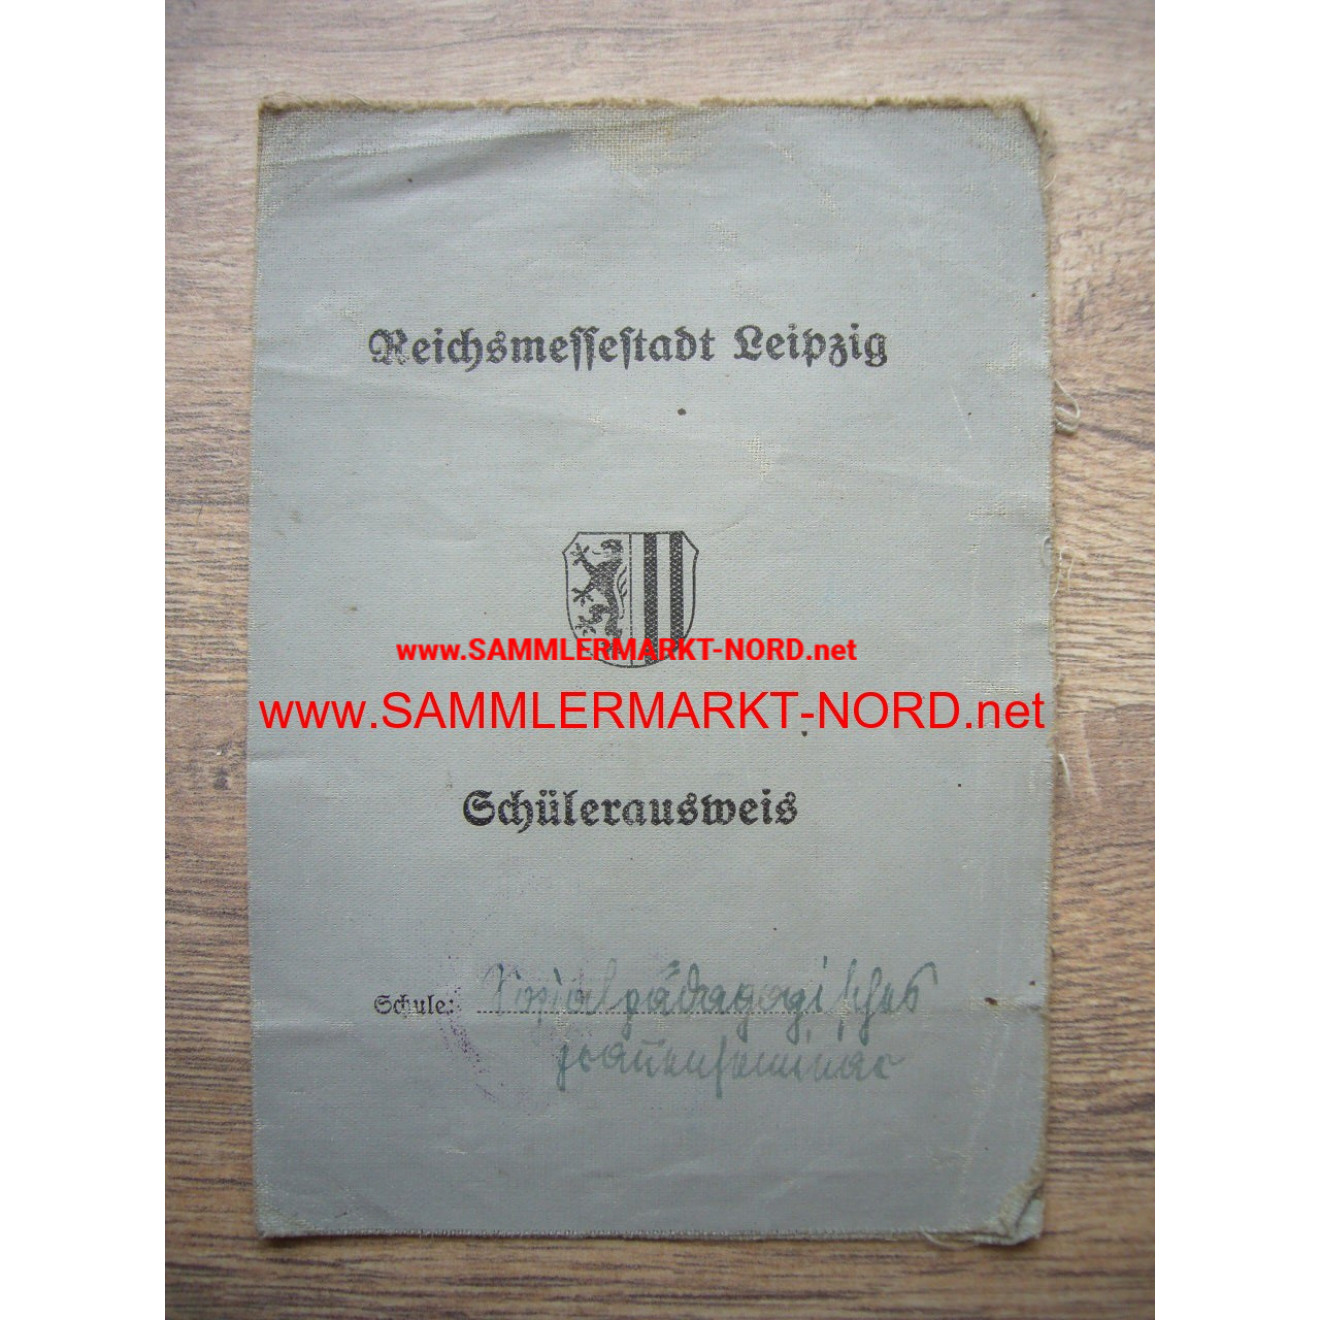 Reichsmesse City Leipzig - student ID card 1940